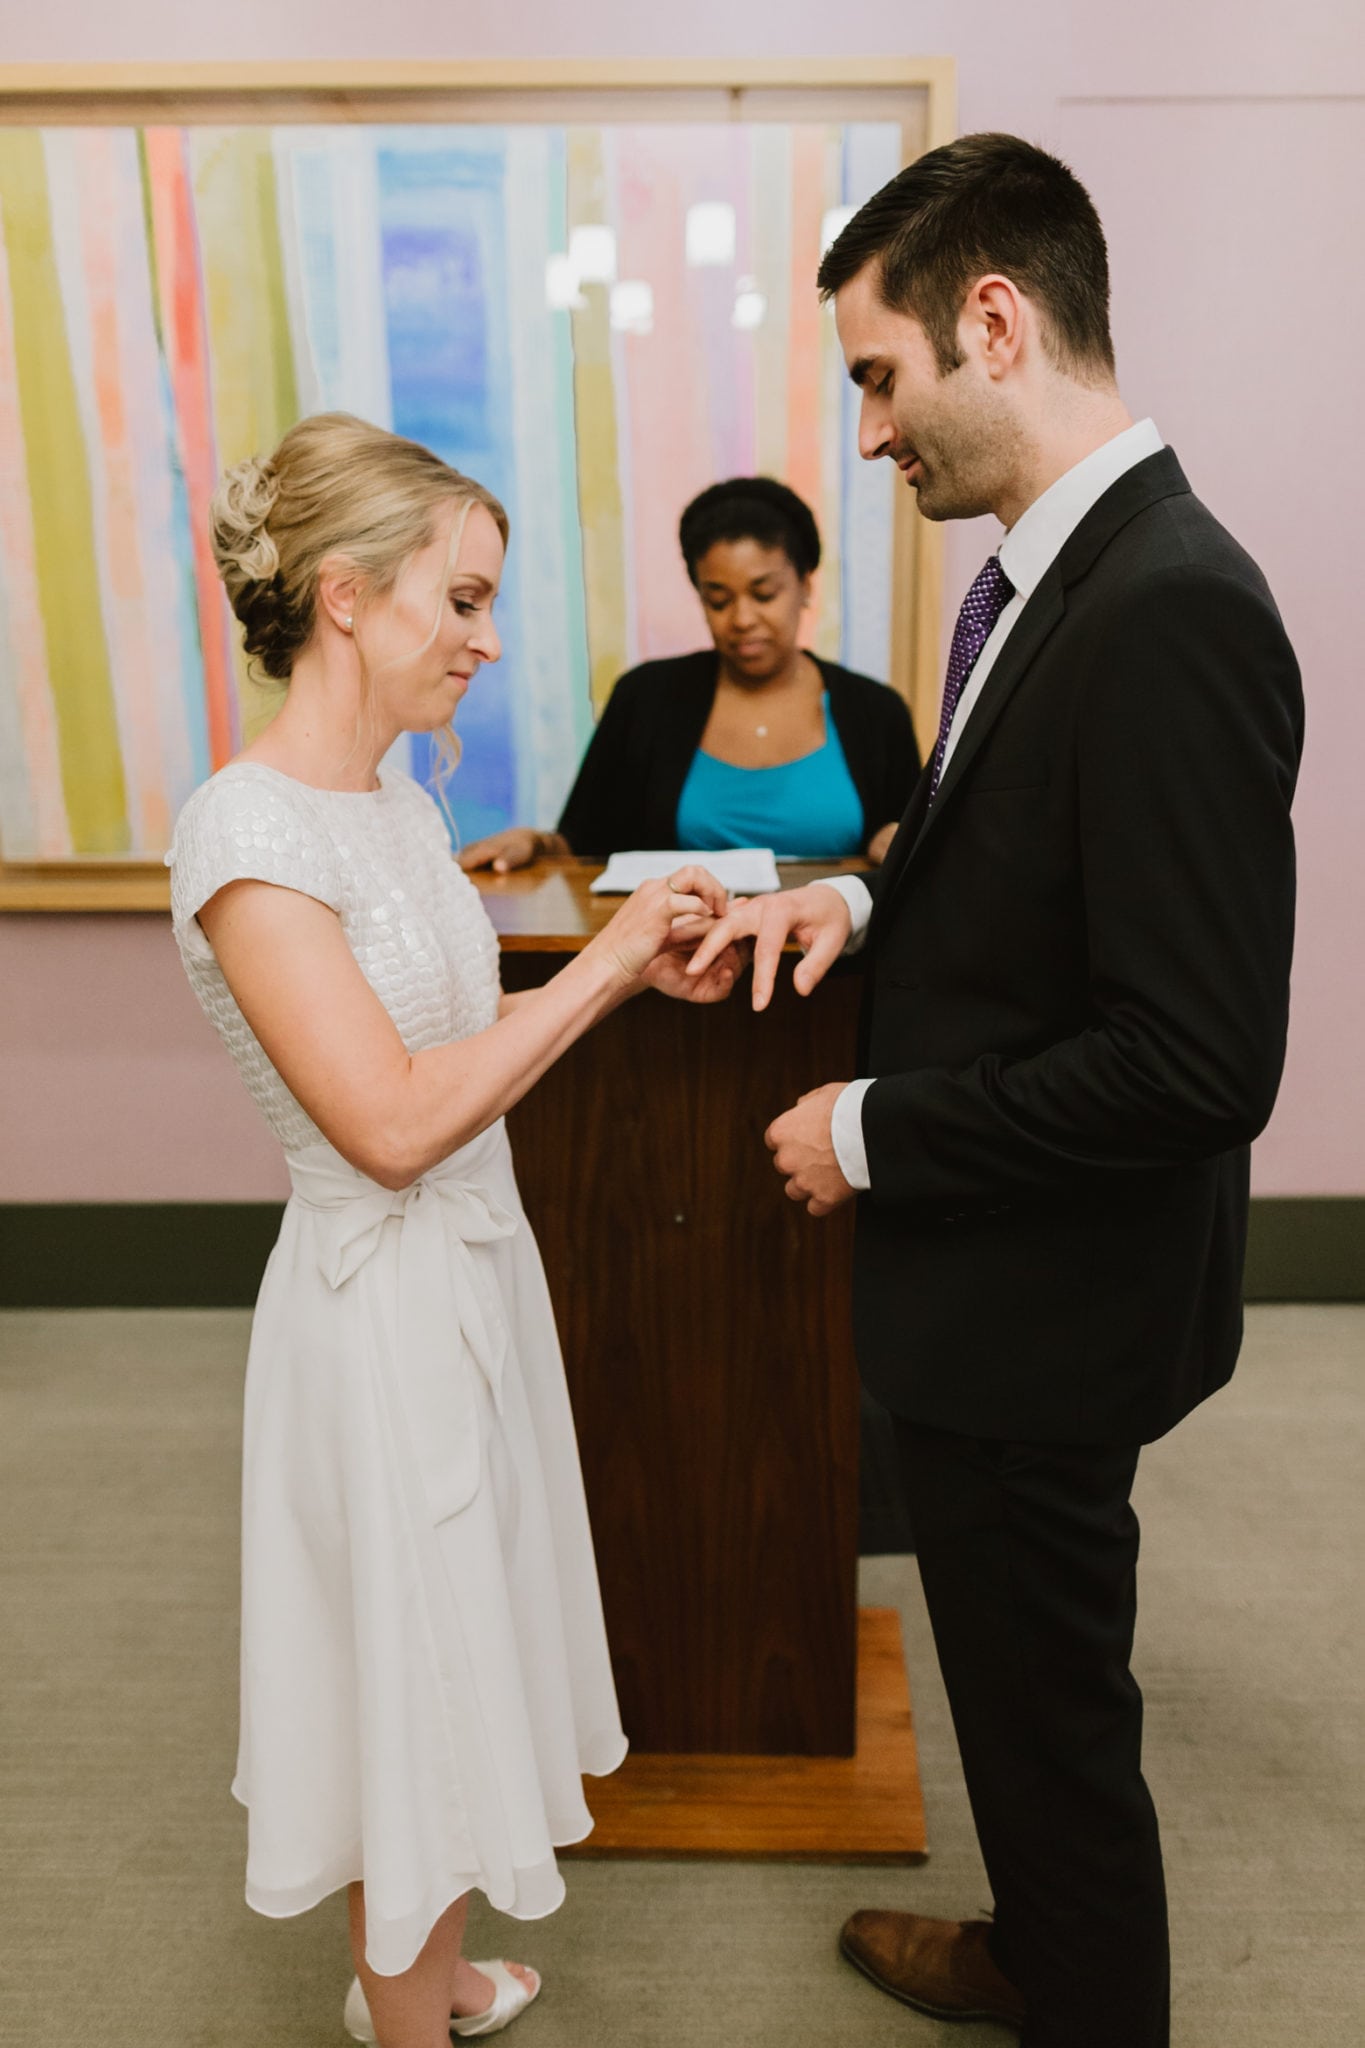 NYC City Hall wedding ceremony photos